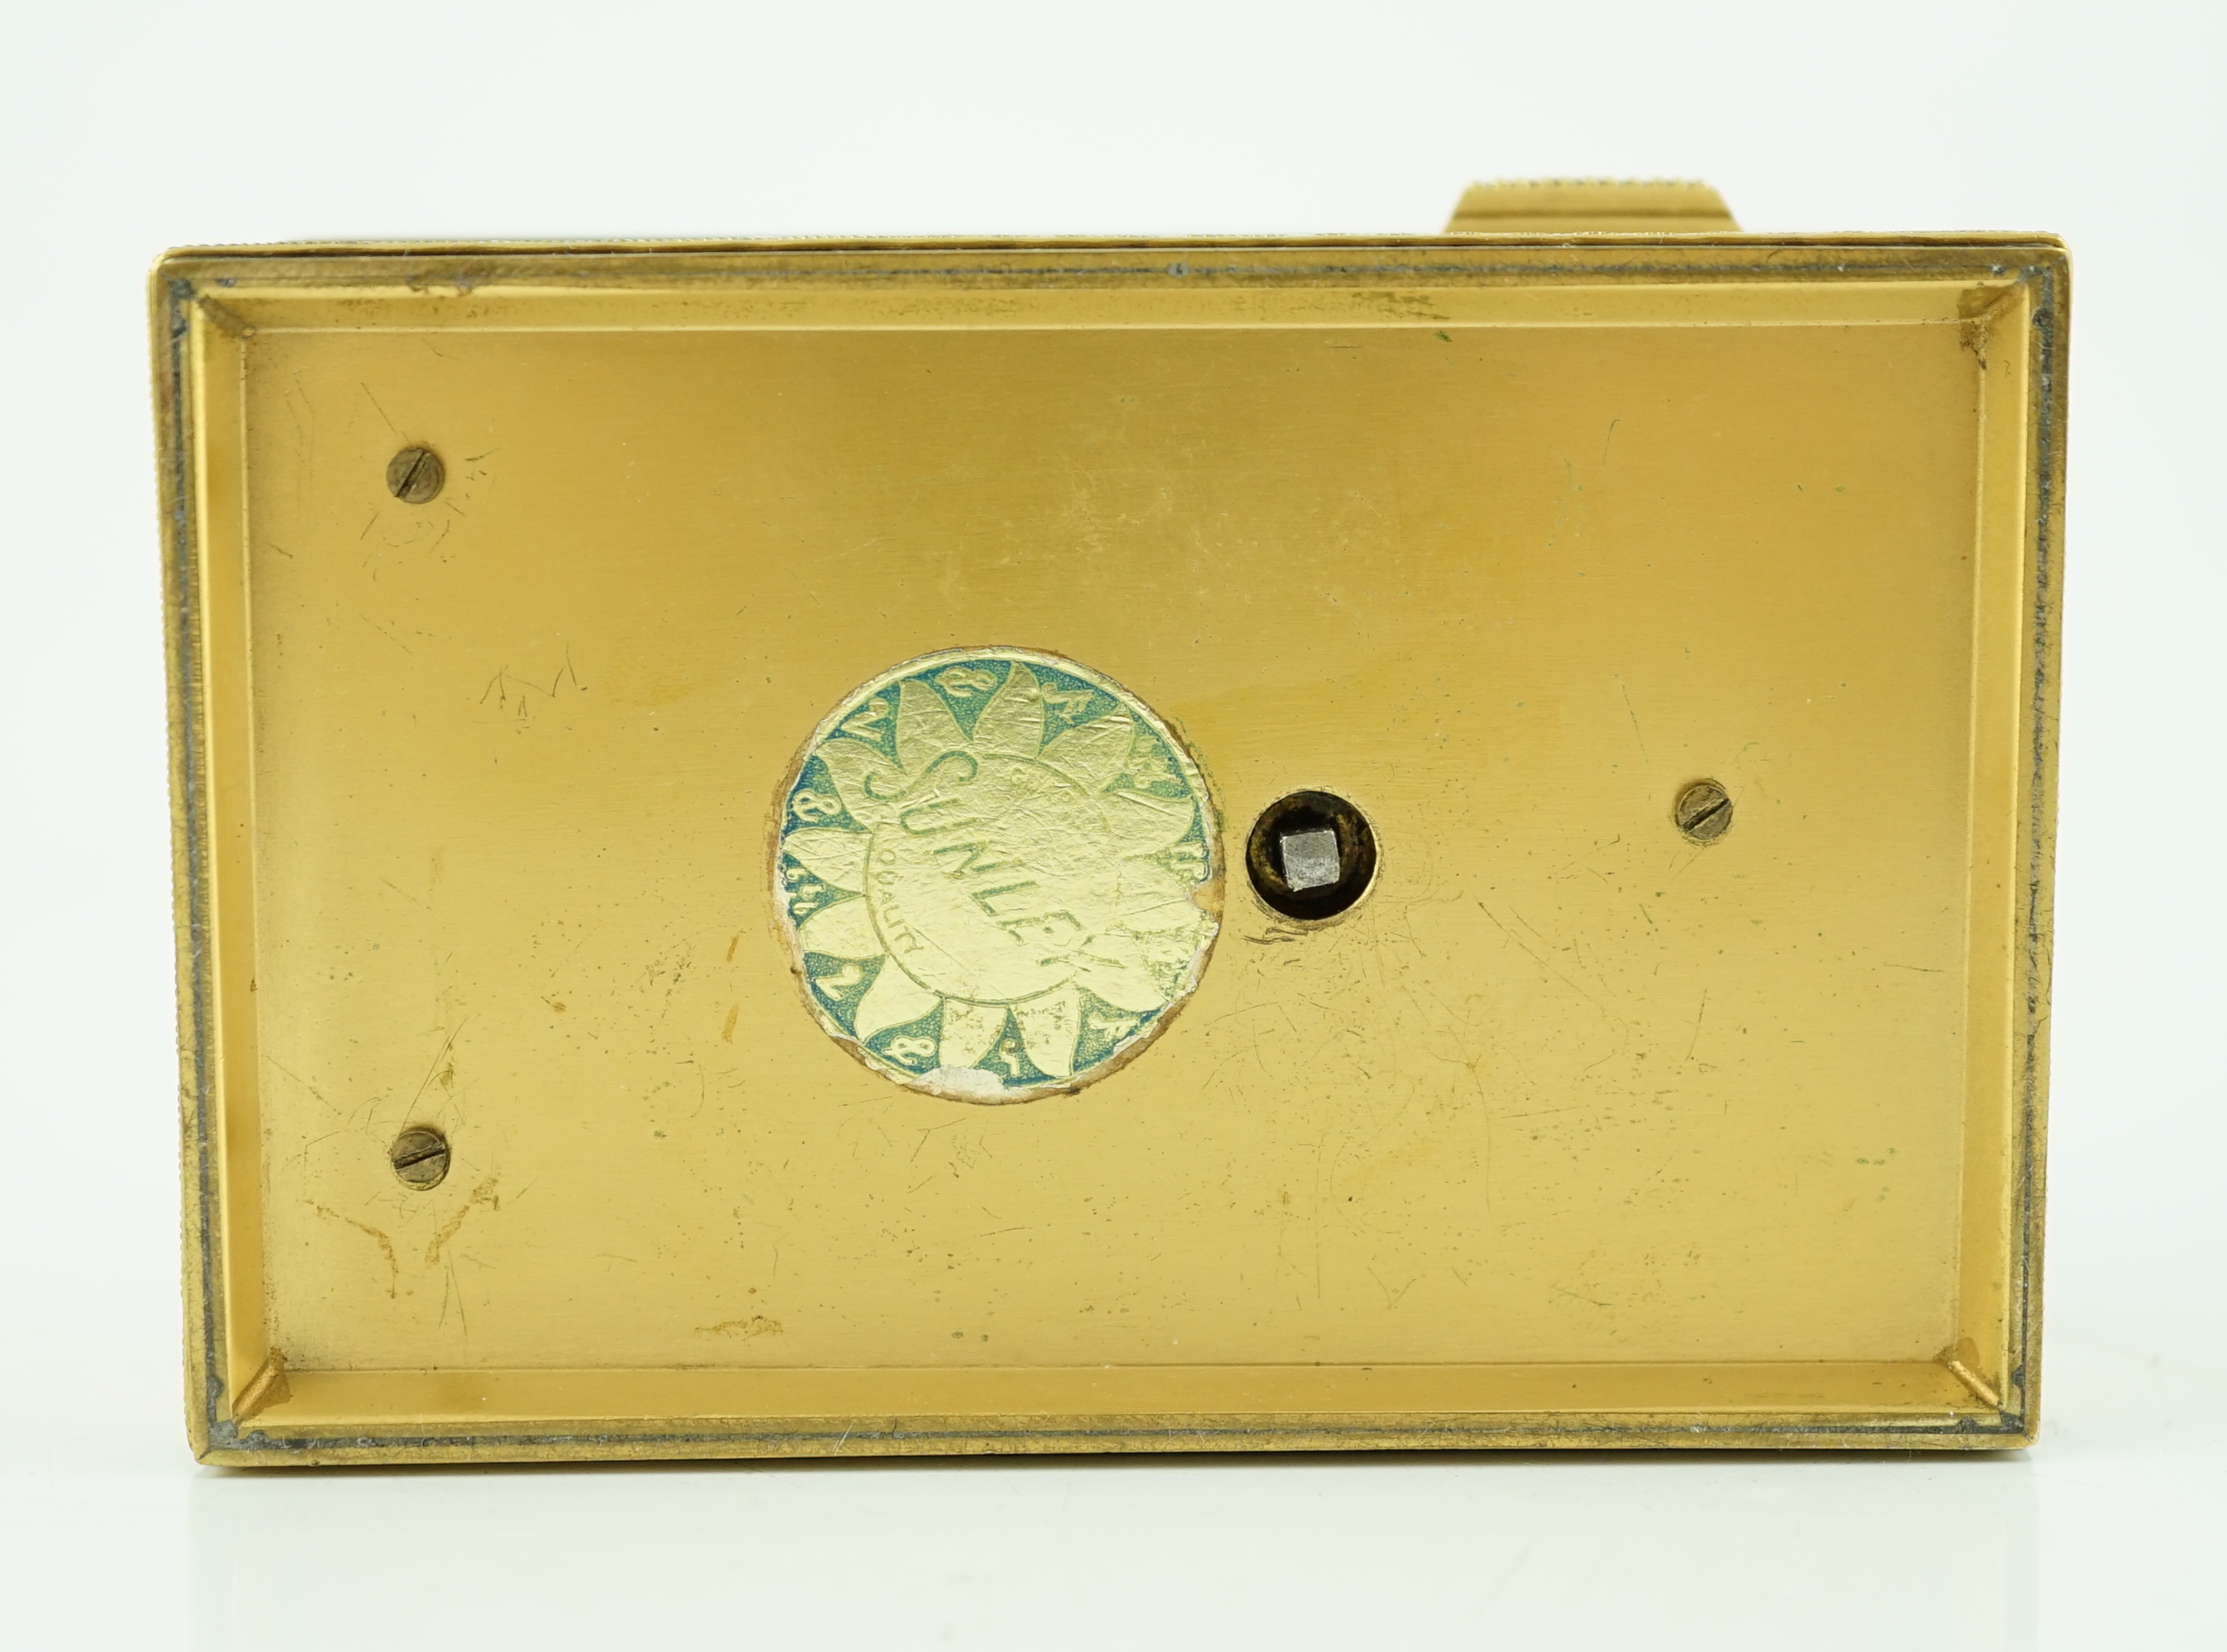 A 20th century gilt brass singing bird box